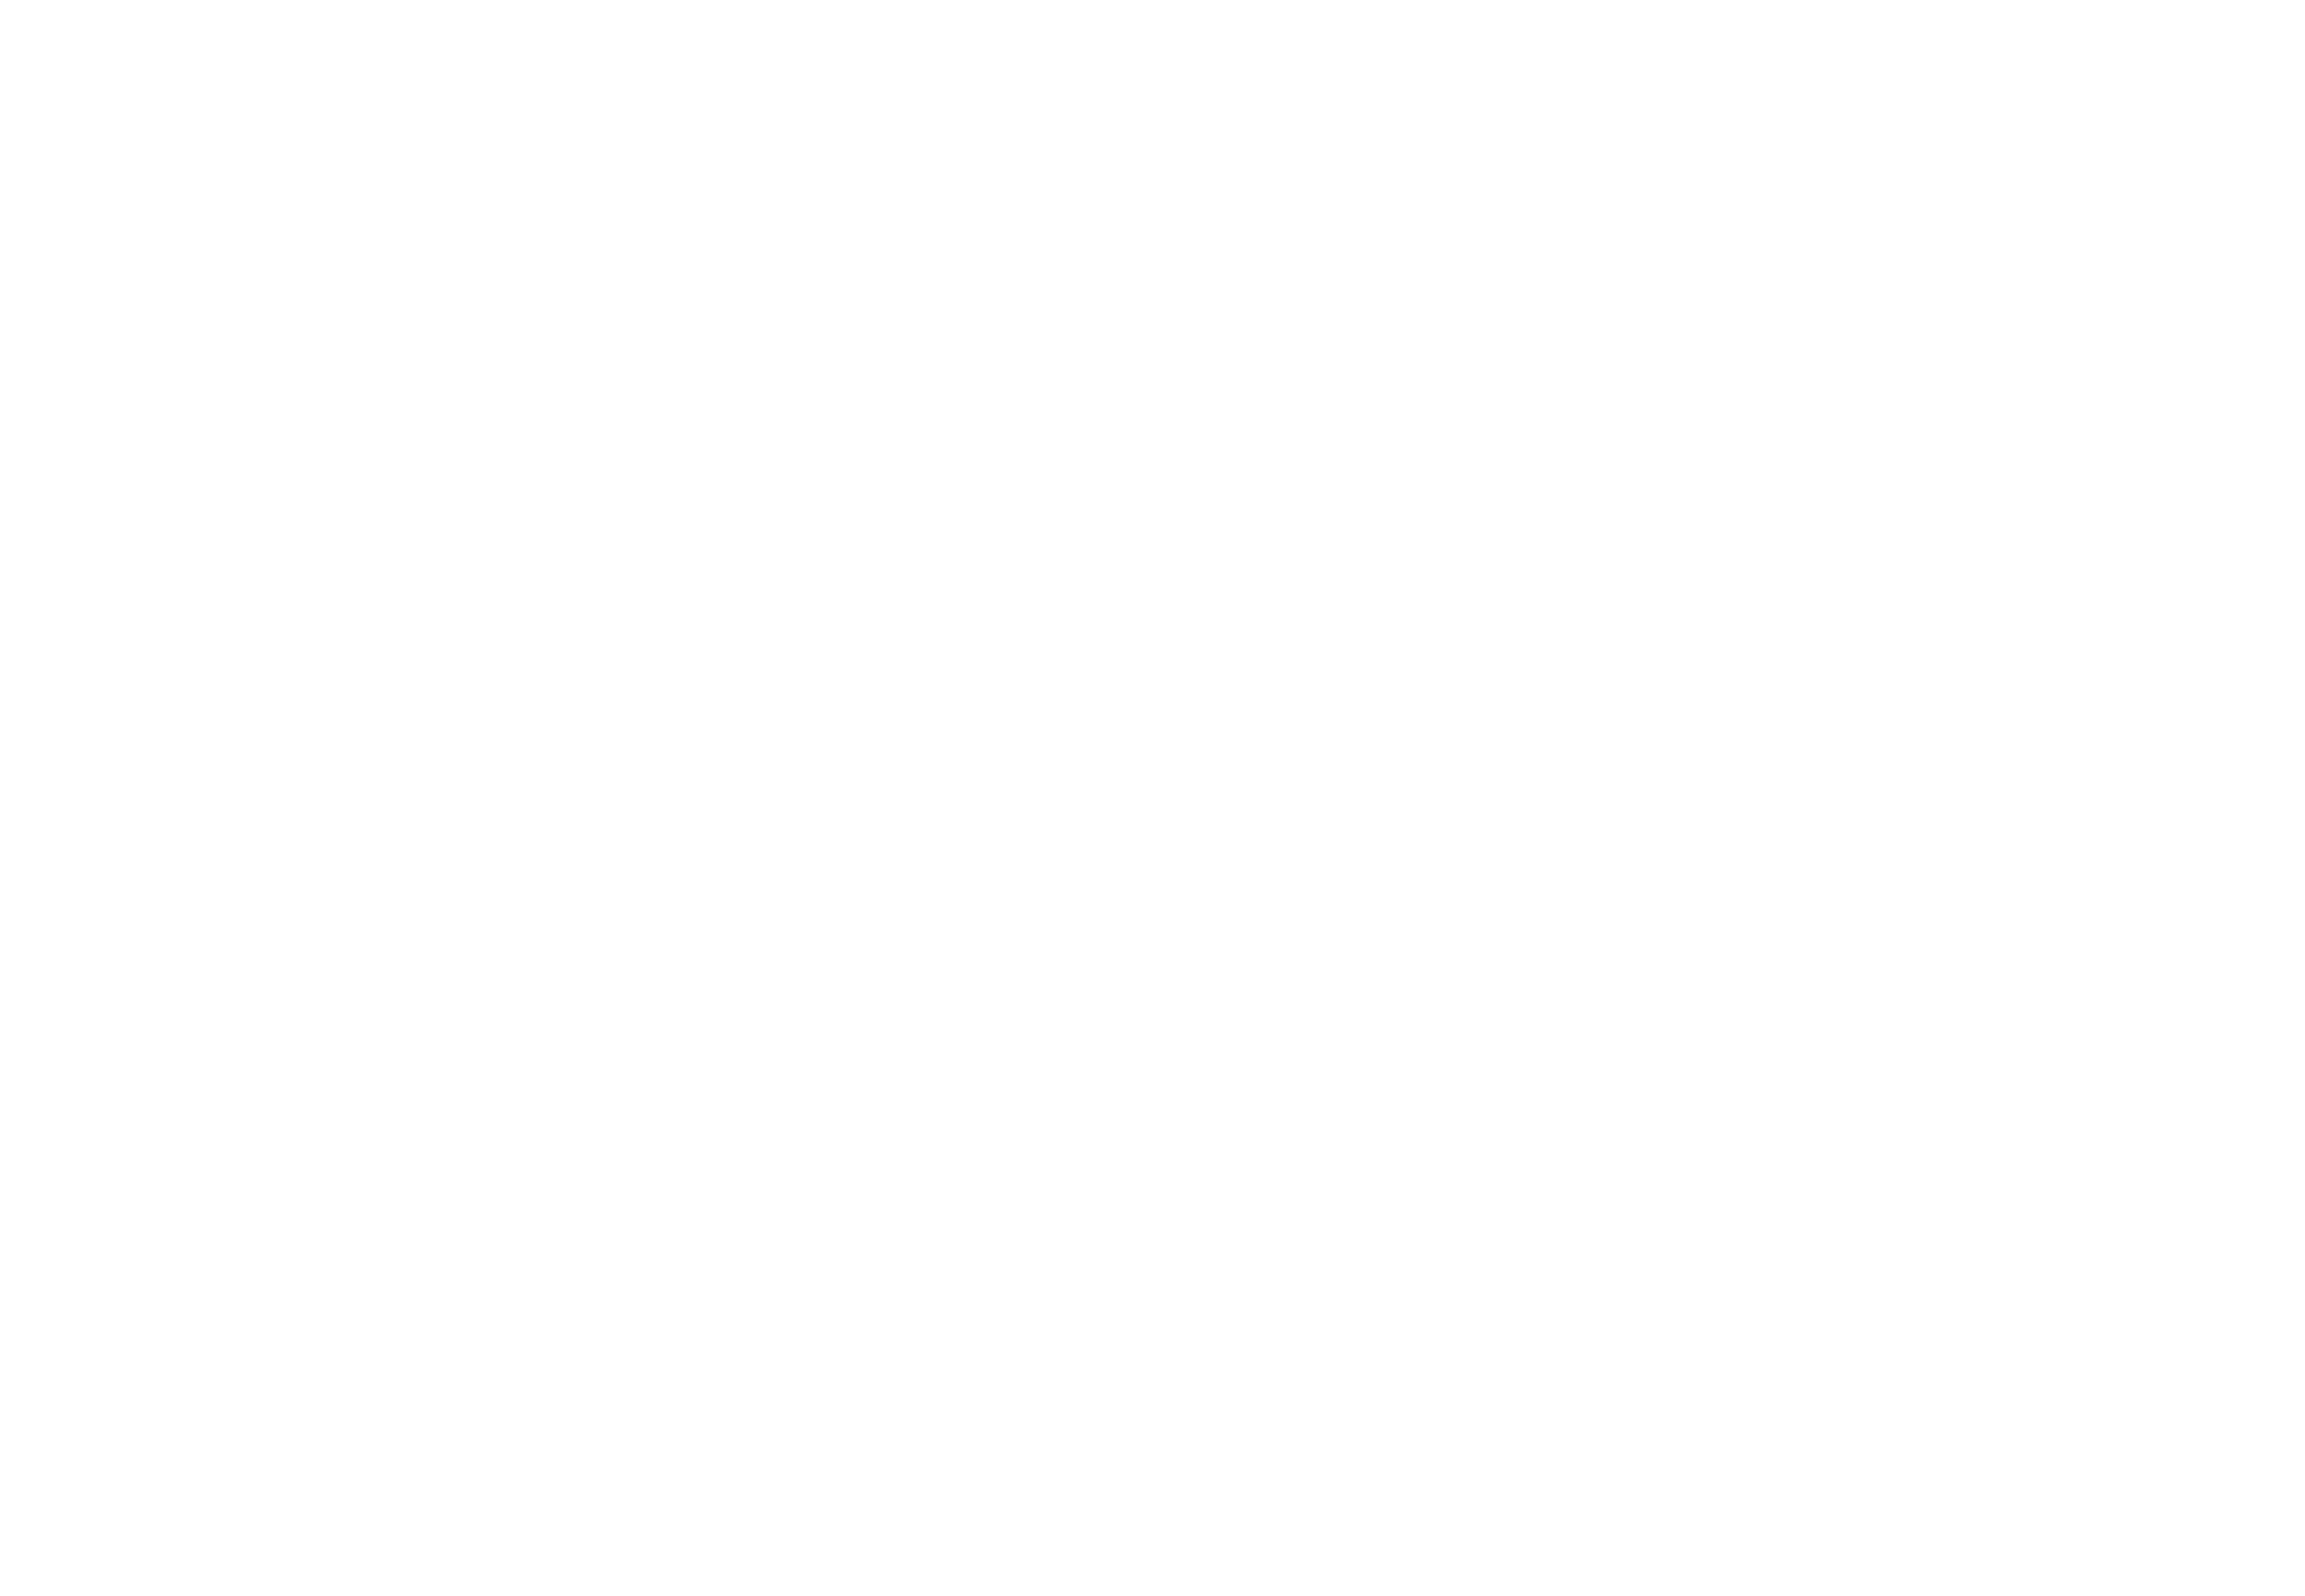 THREE60 GROUP